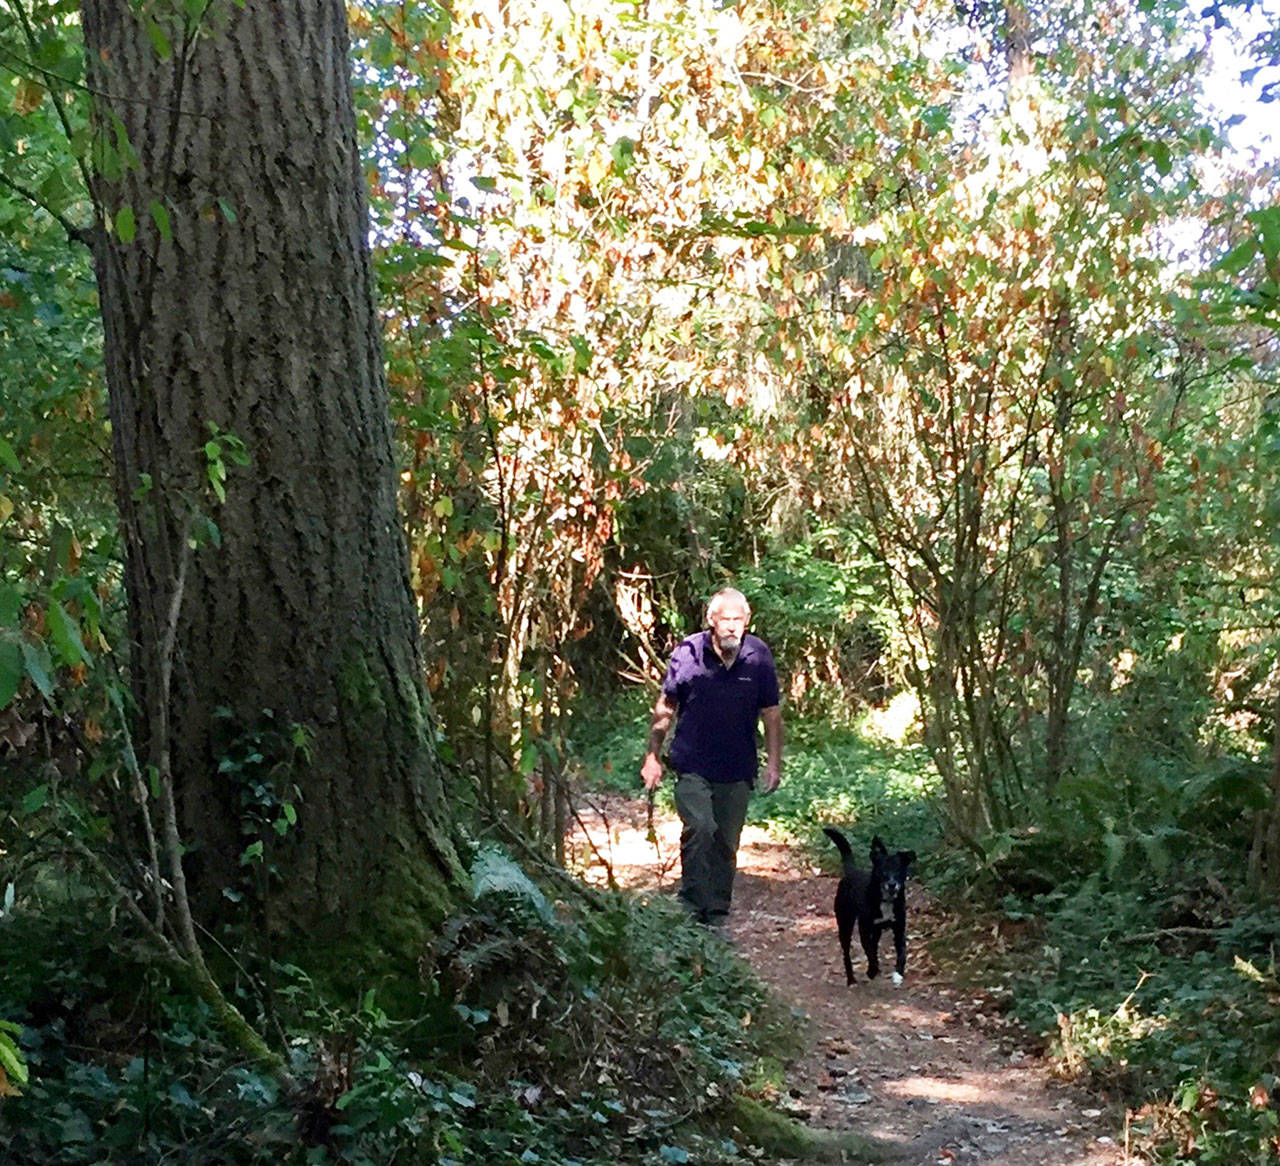 Trail-keeper John Burke enters Burton Acres Park with his dog, Lola. (Chris Woods Photo)